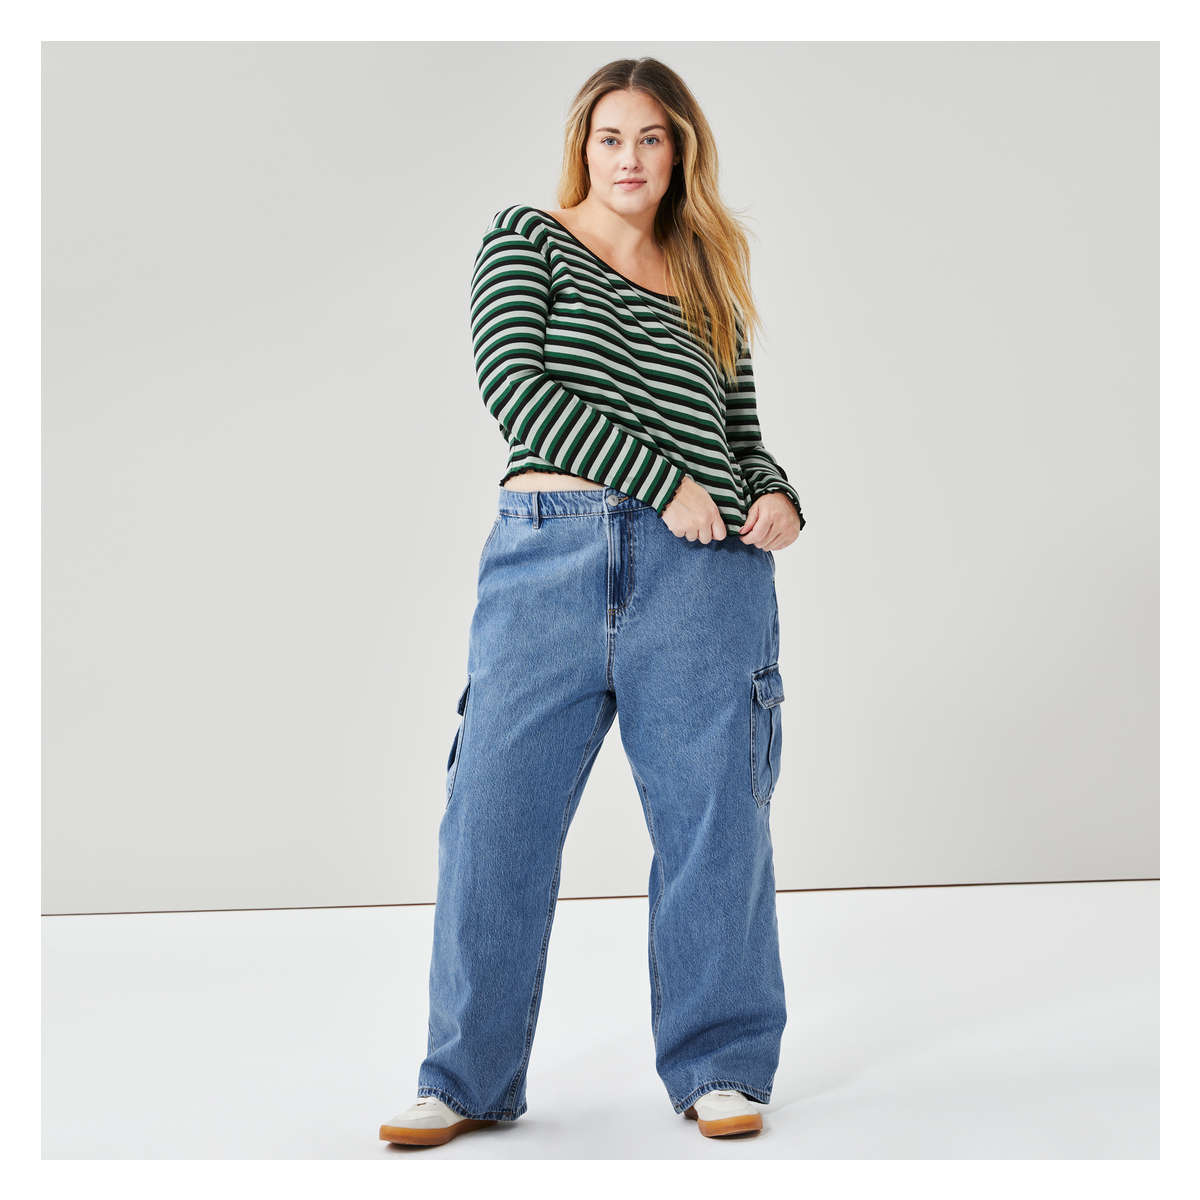 Buy online Women's Plain Cargo Jeans from Jeans & jeggings for